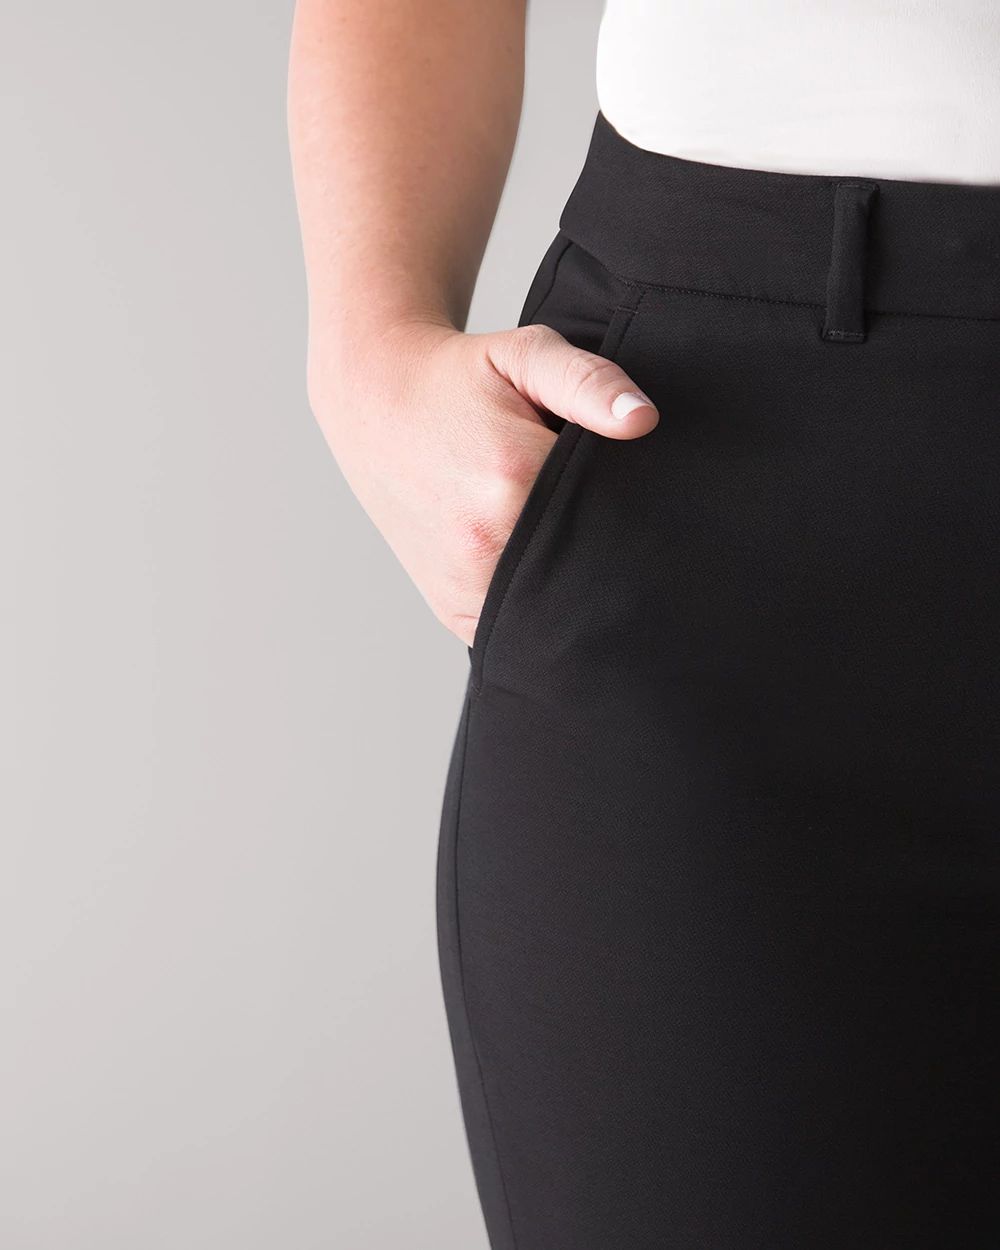 Curvy WHBM® Elle Slim Ankle Comfort Stretch Pant